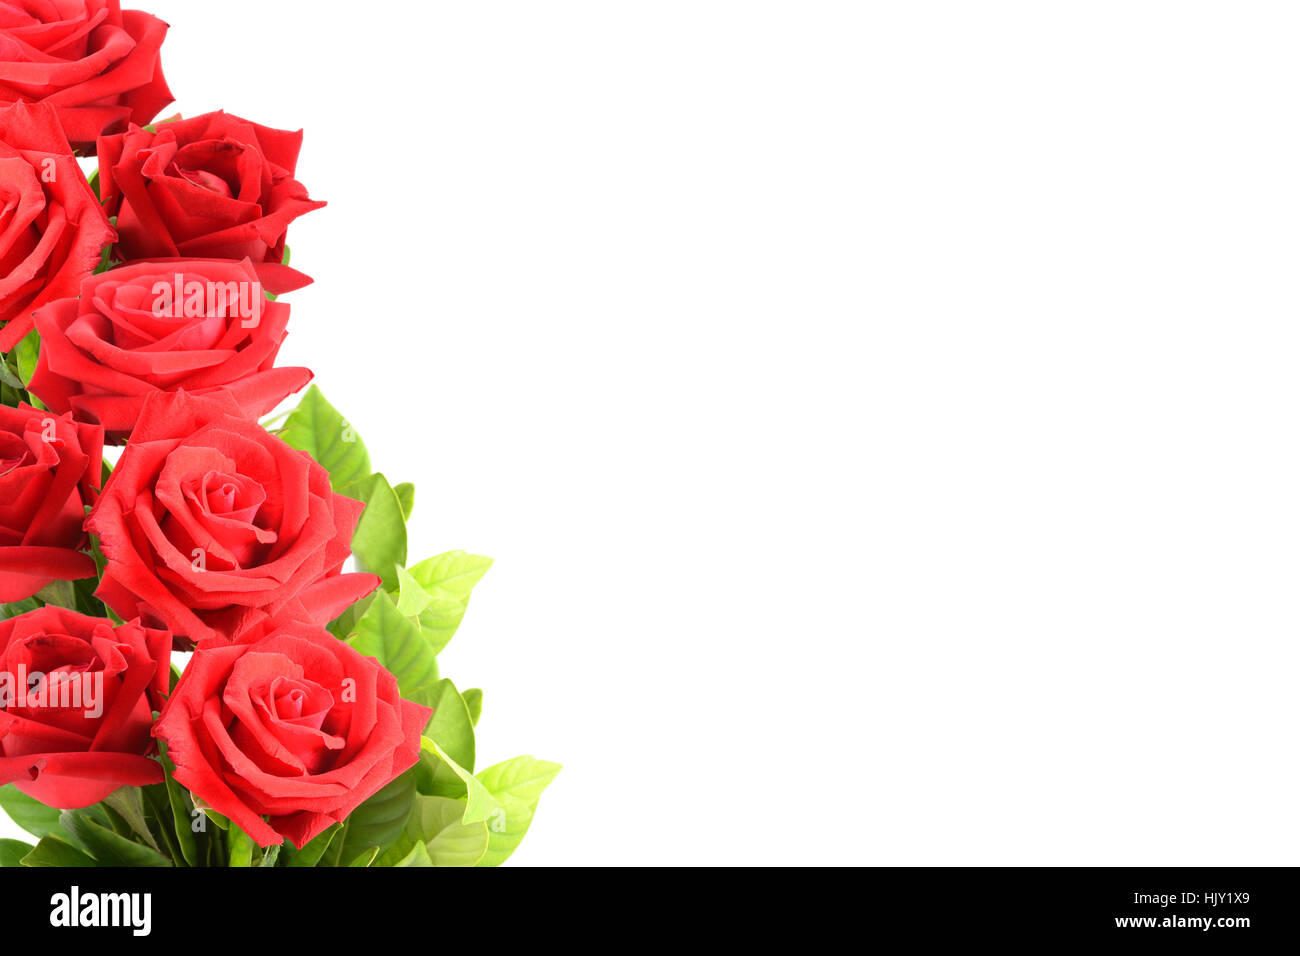 Rosas para san valentin fotografías e imágenes de alta resolución - Alamy